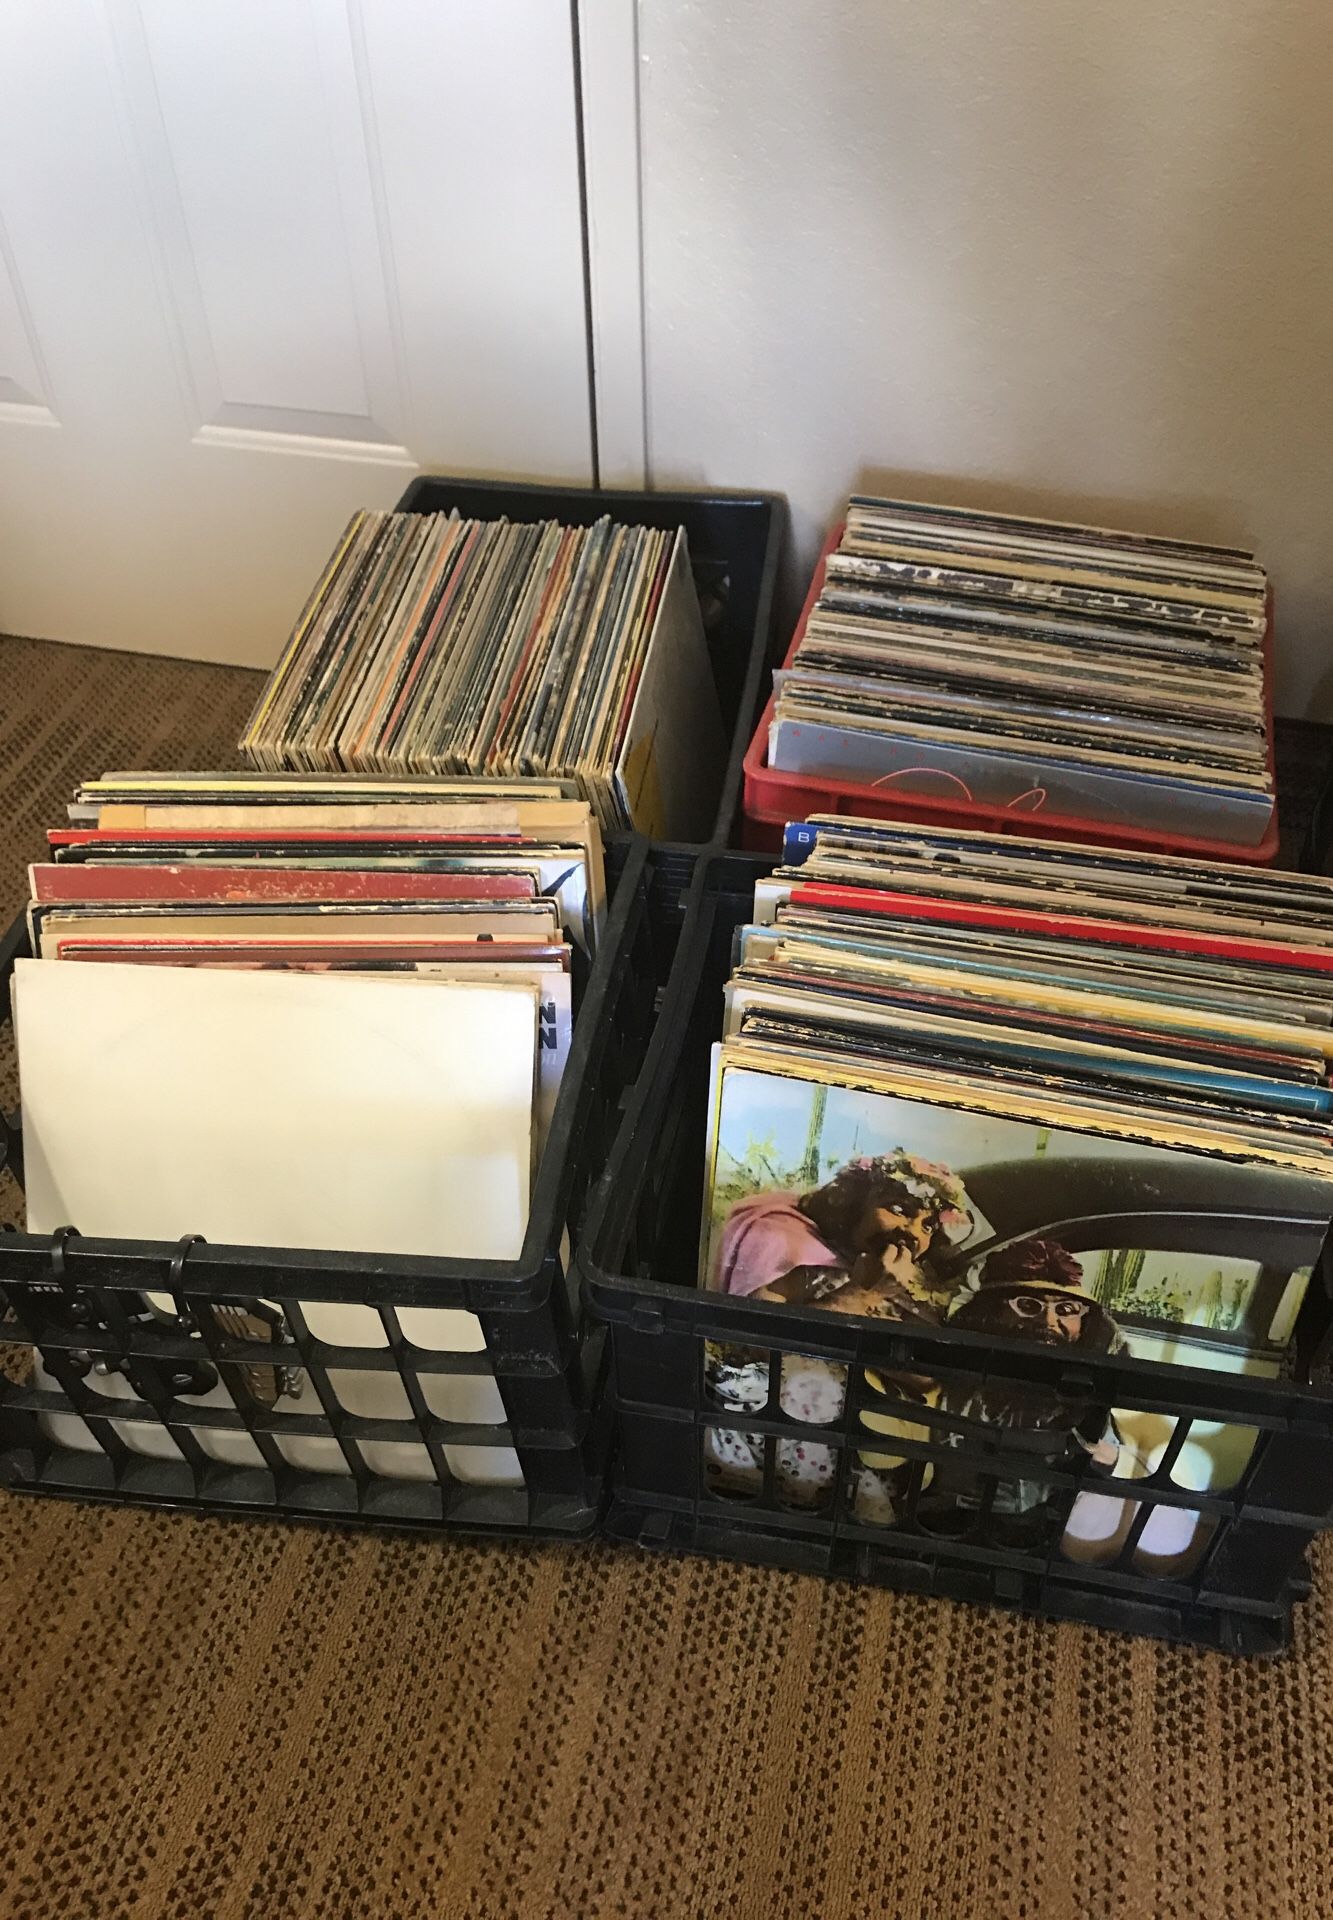 Records Vinyls good condition